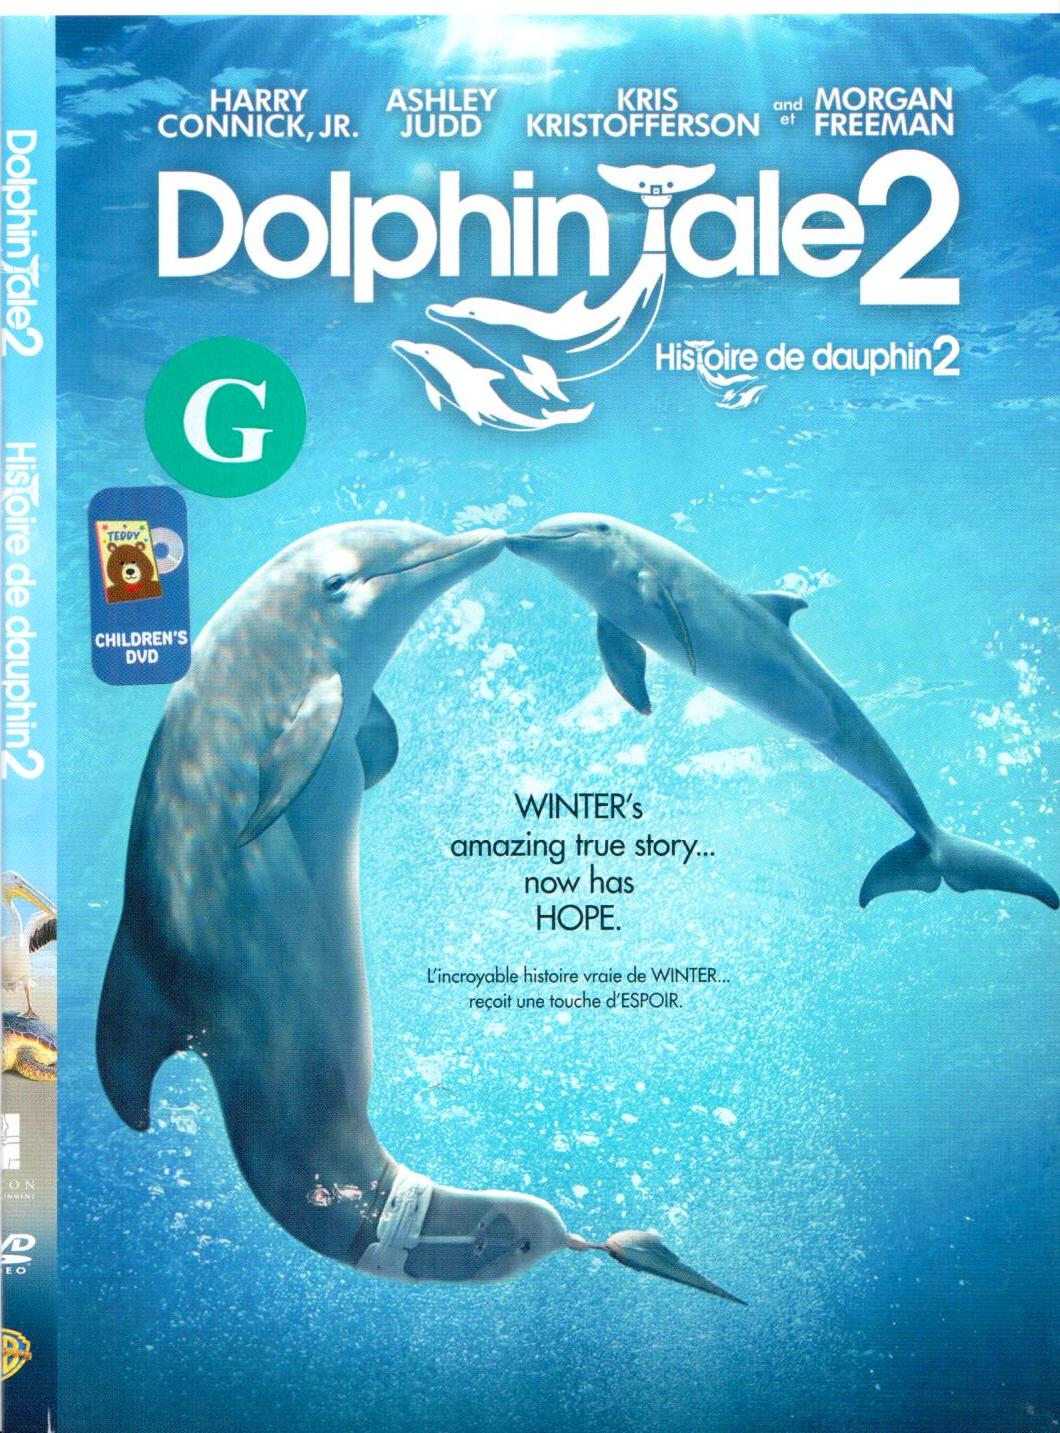 Dolphin tale 2